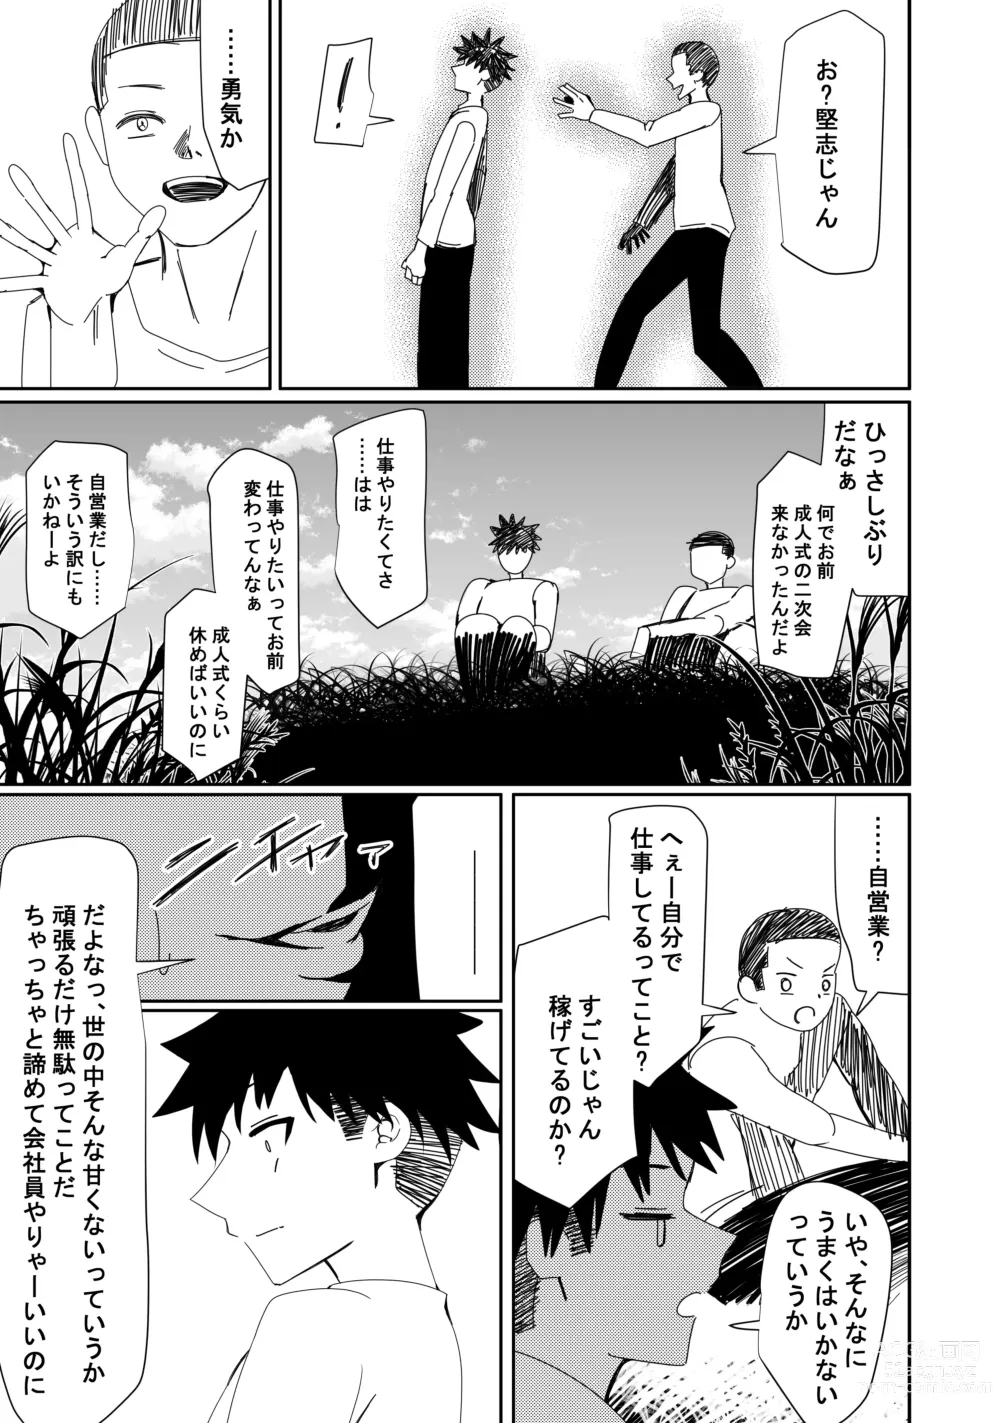 Page 18 of manga Junai Create Tokuten Manga